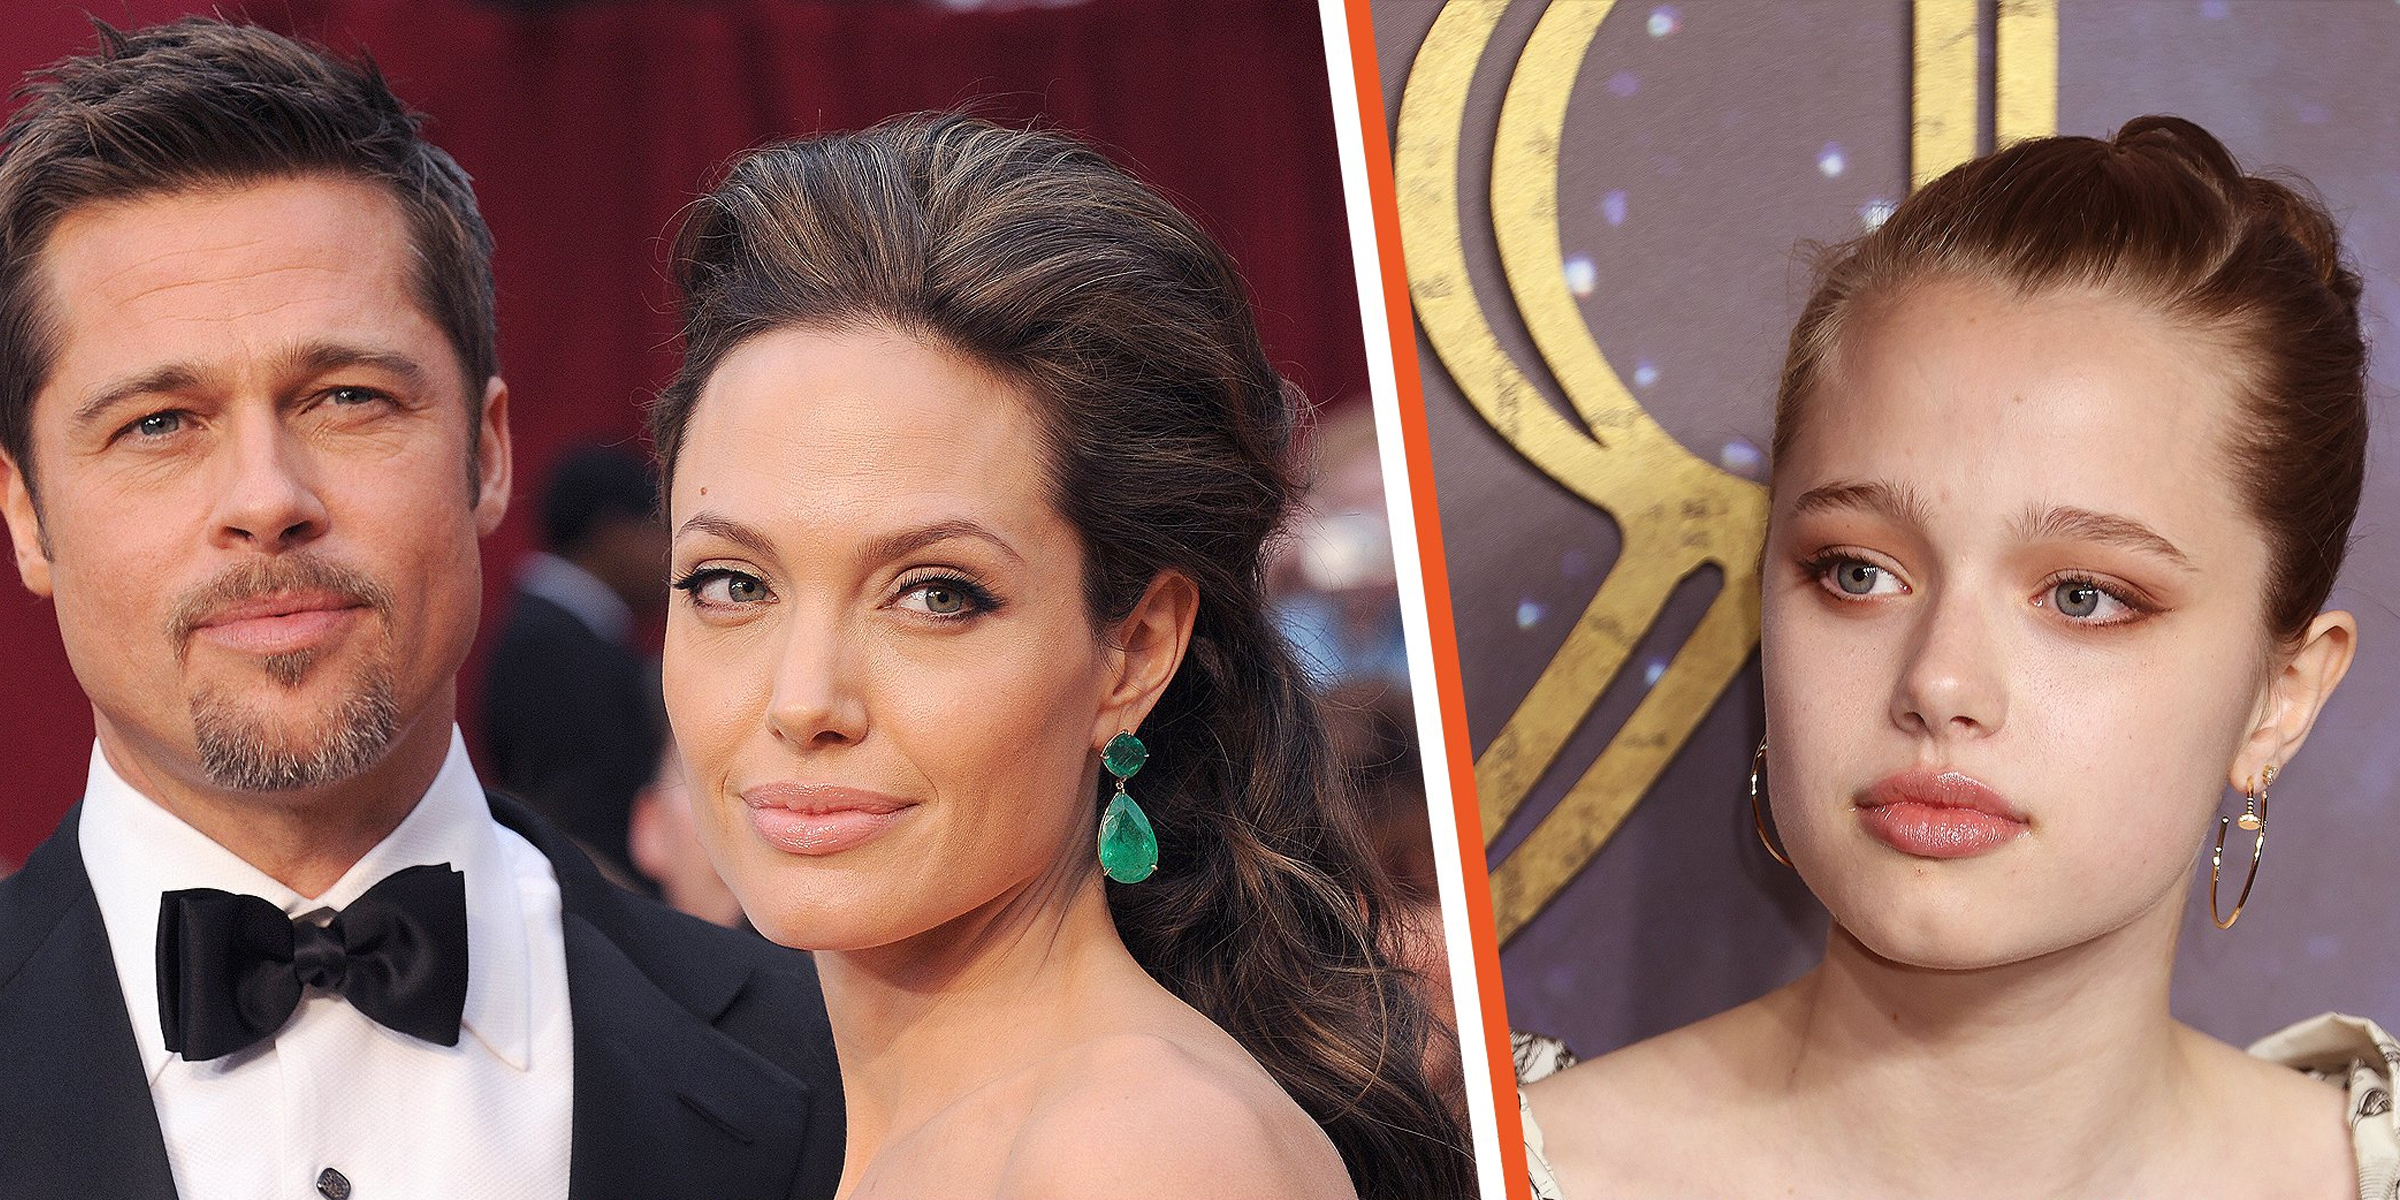 Angelina Jolie & Brad Pitt | Shiloh Nouvel Jolie-Pitt | Source : Getty Images